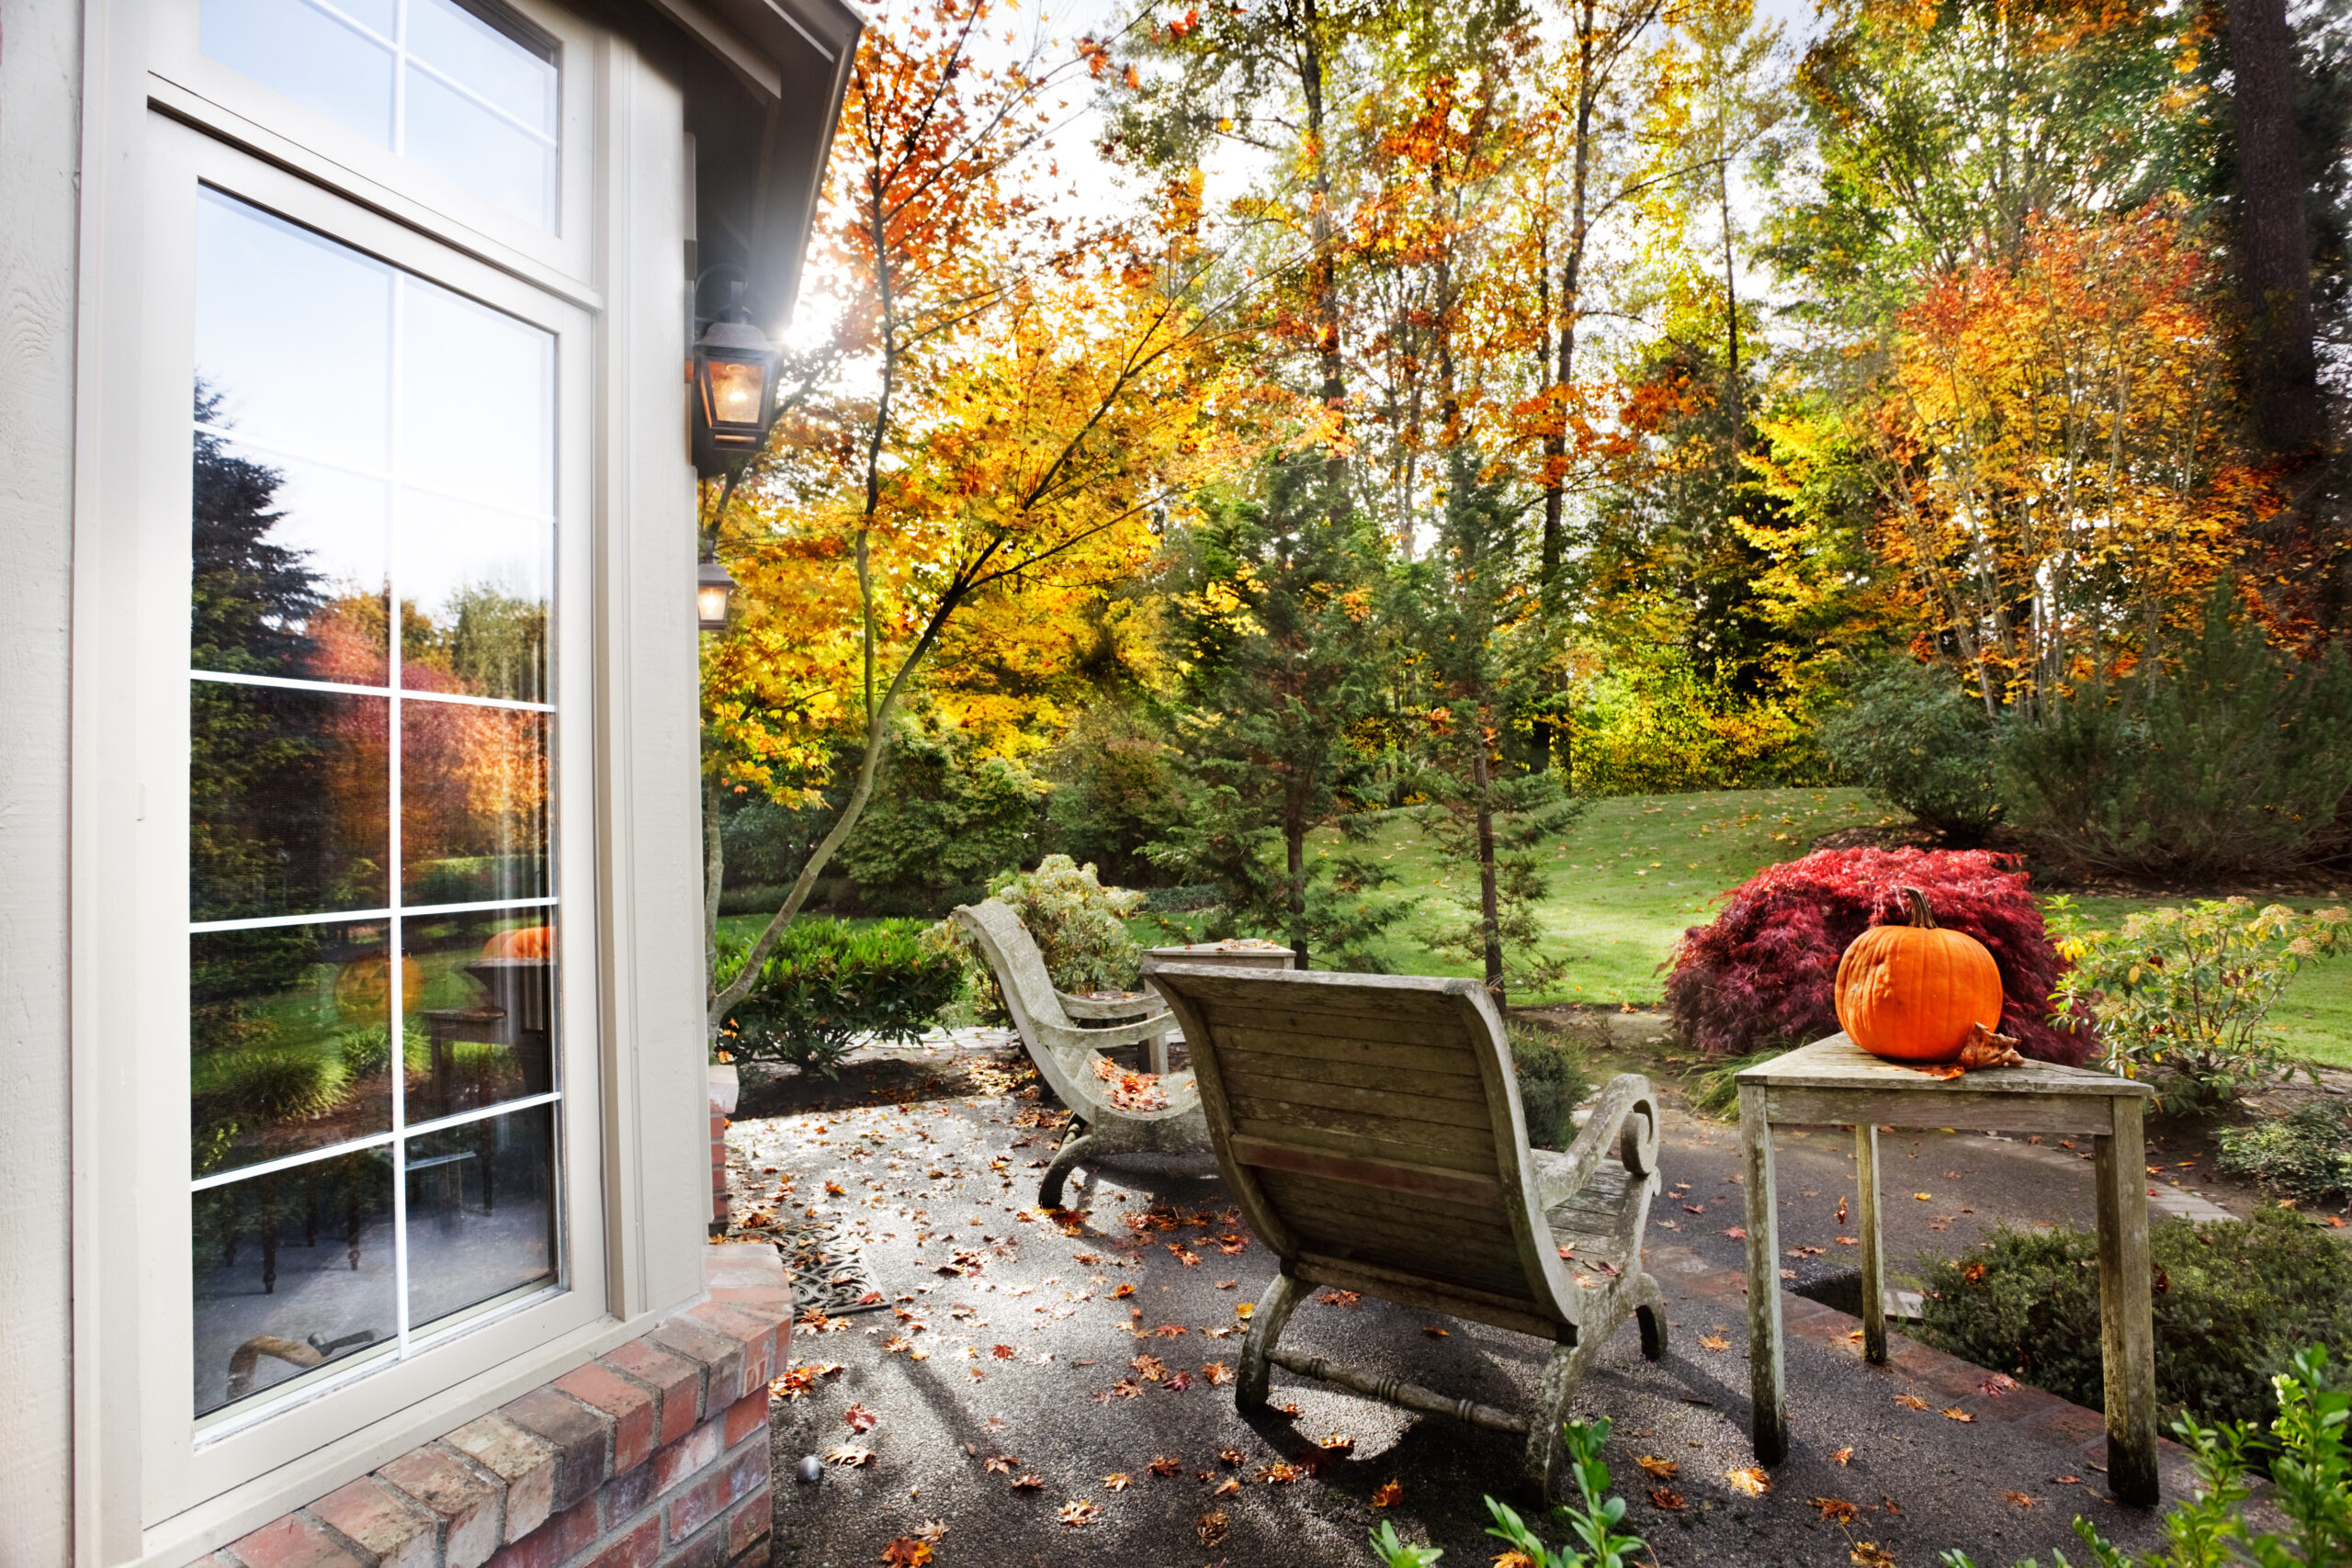 Preparing your Backyard for Fall